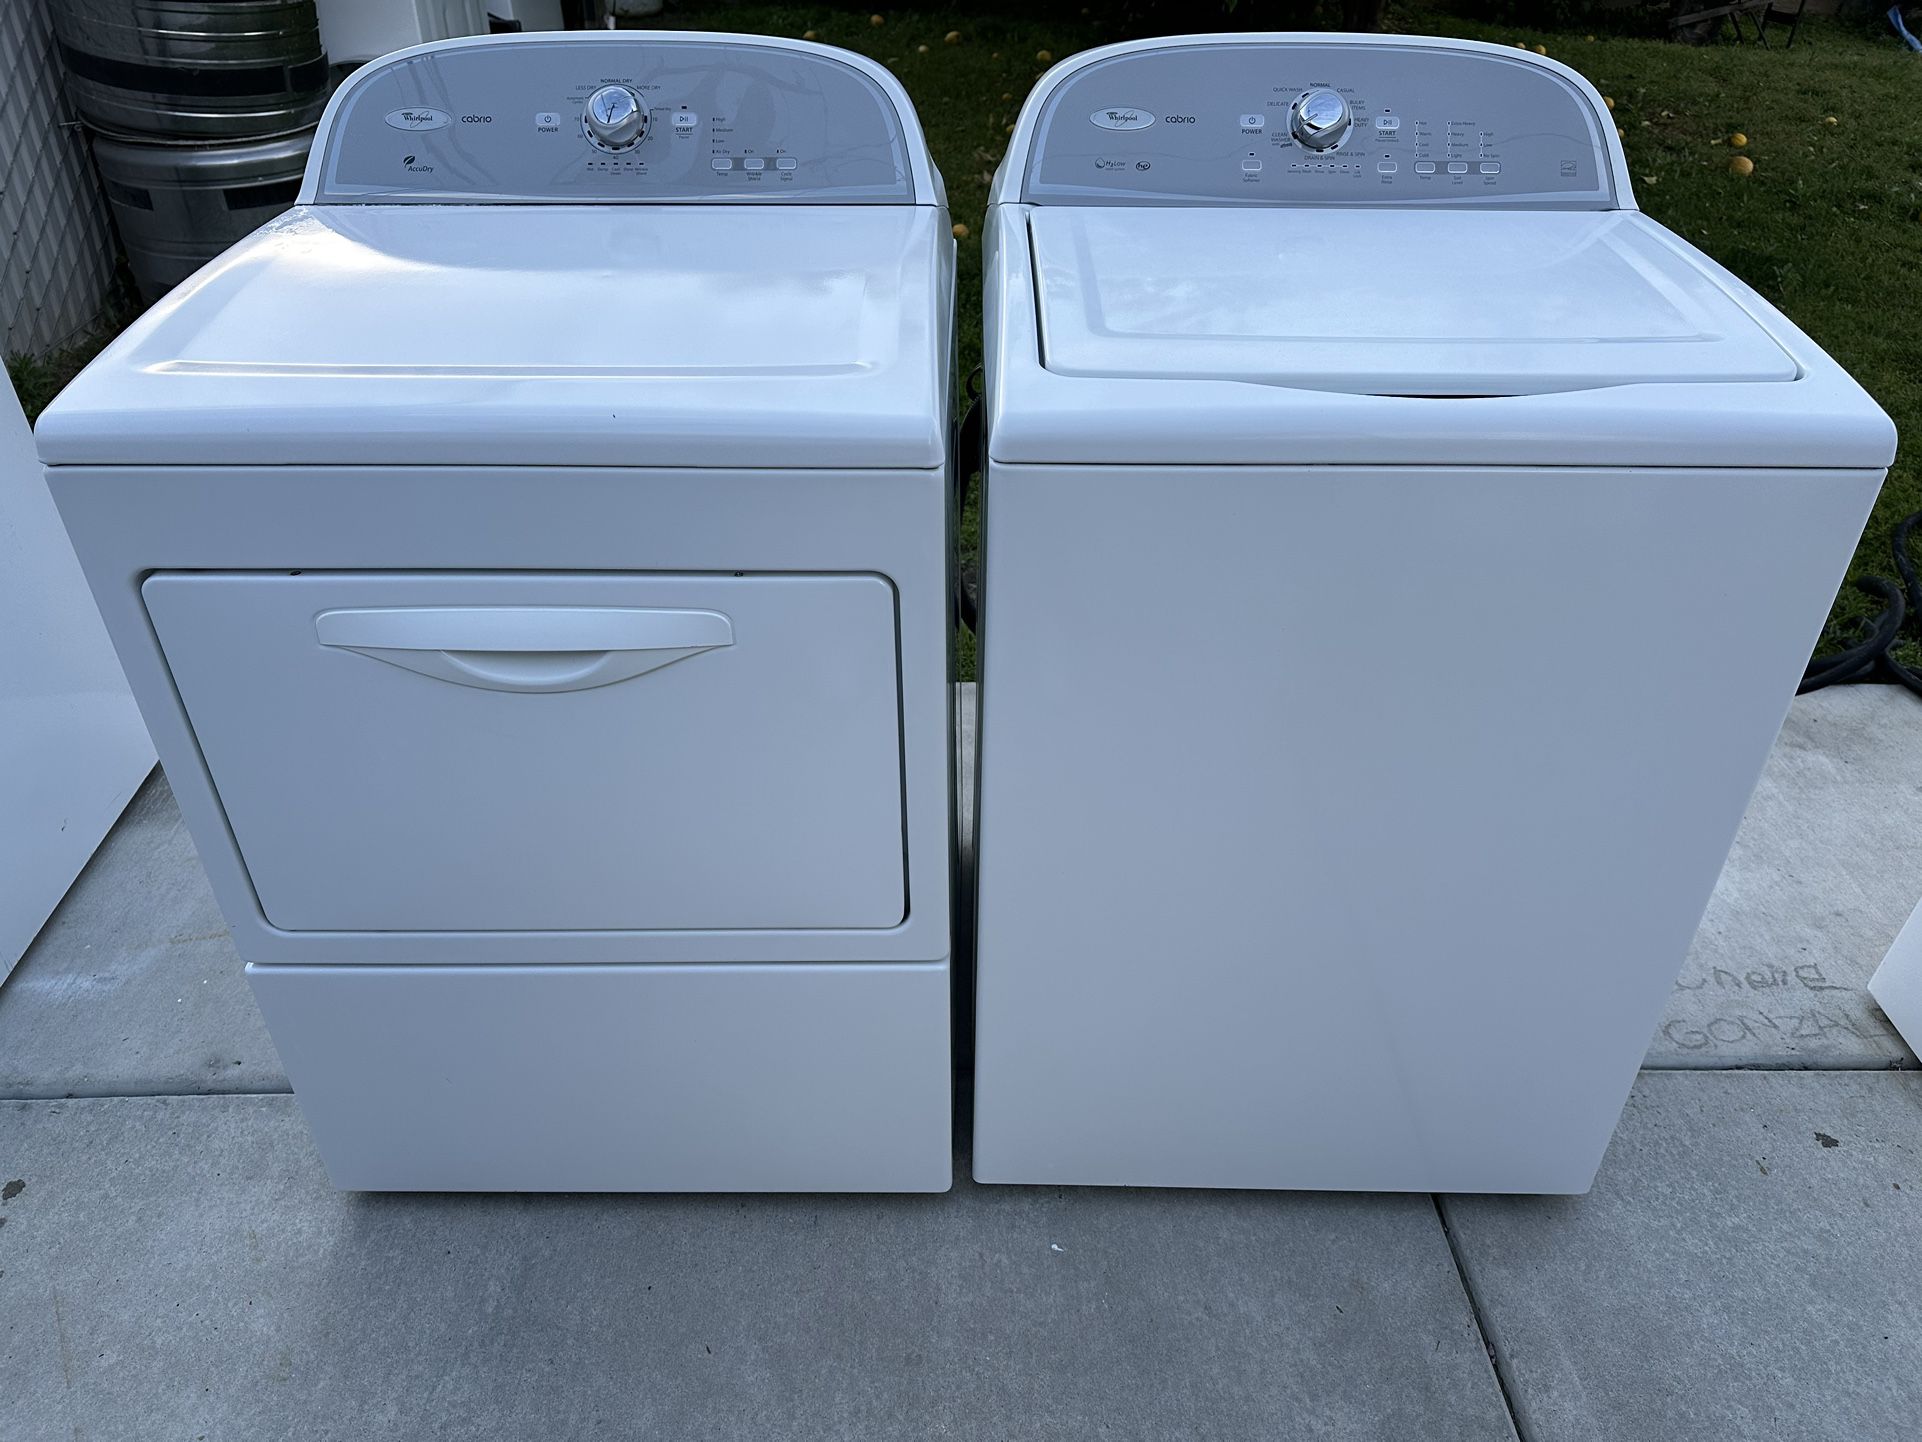 Whirlpool Washer&Dryer $440 With Warranty 